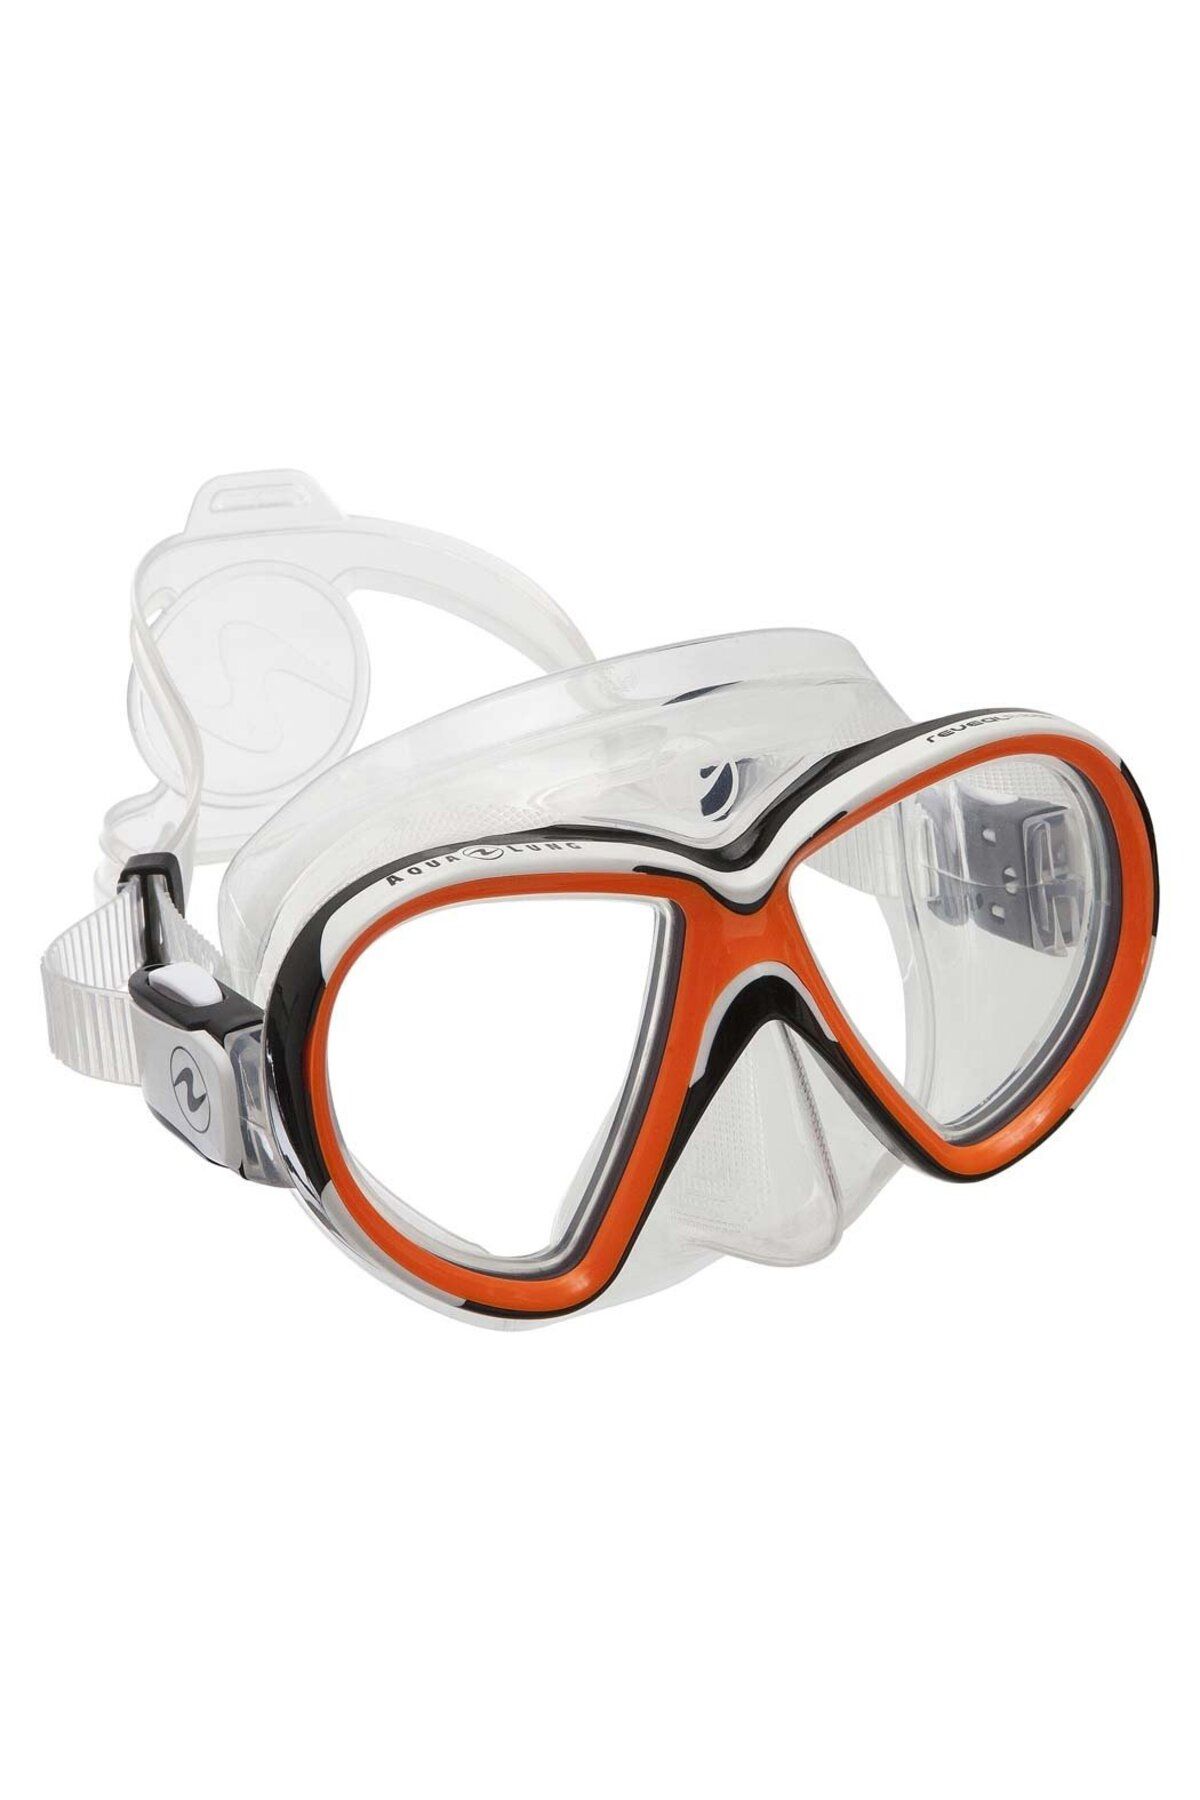 Aqua Lung Reveal X2 Clear/orange Dalış Maskesi